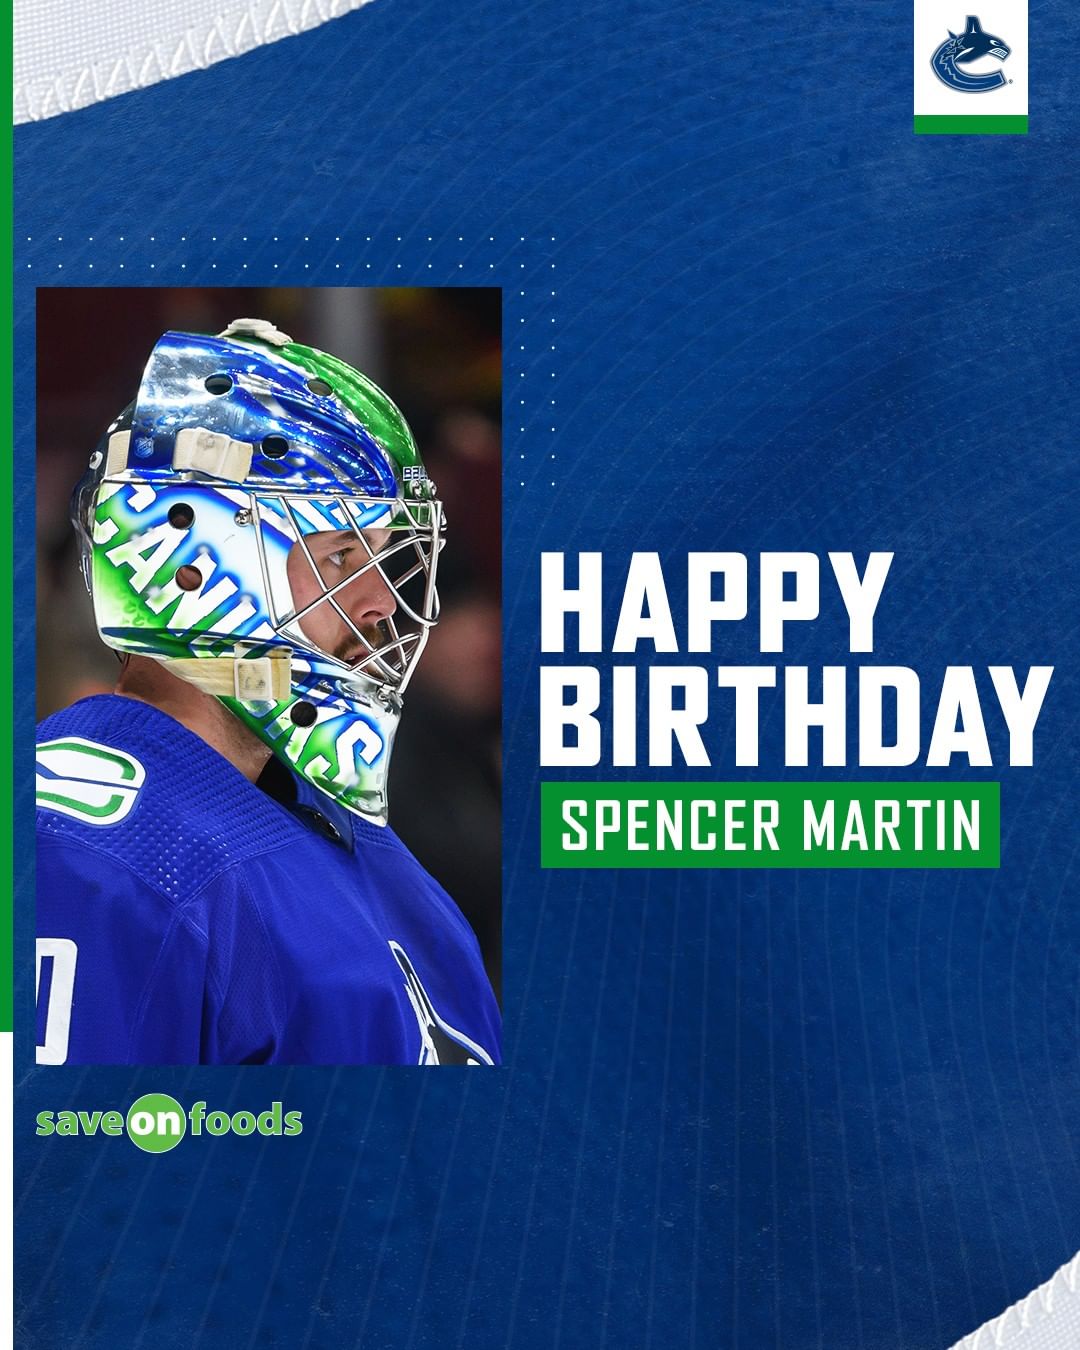 Happy birthday, Spencer Martin...